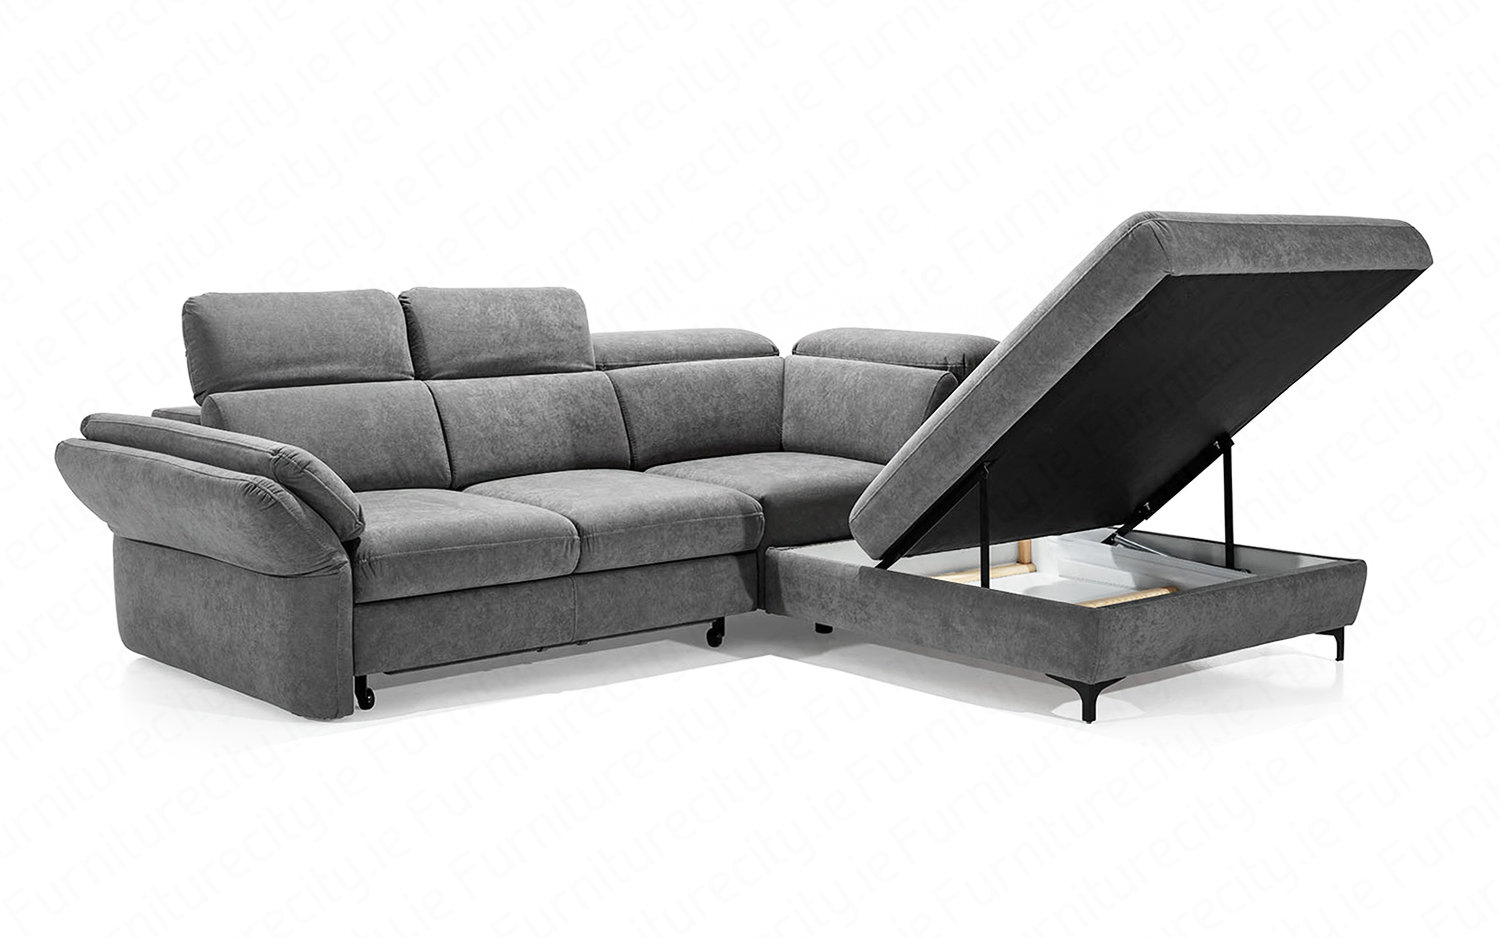 Sofa bed SERANO OPEN by Furniturecity.ie